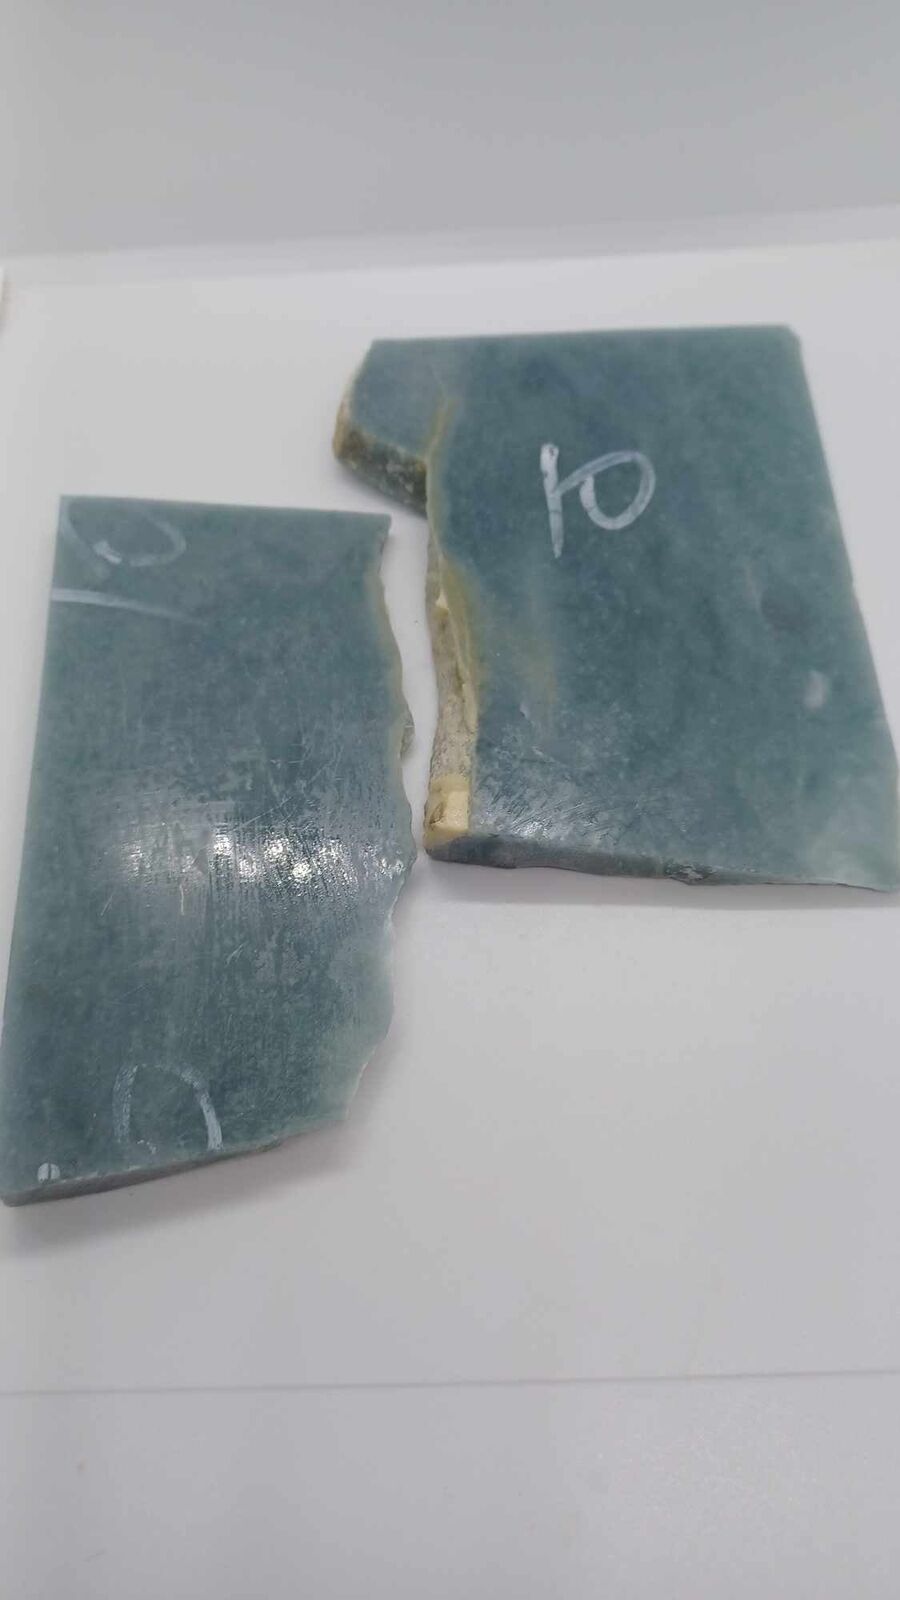 Medium Blue Jadeite Slabs - 263g - High Translucency - On sale now